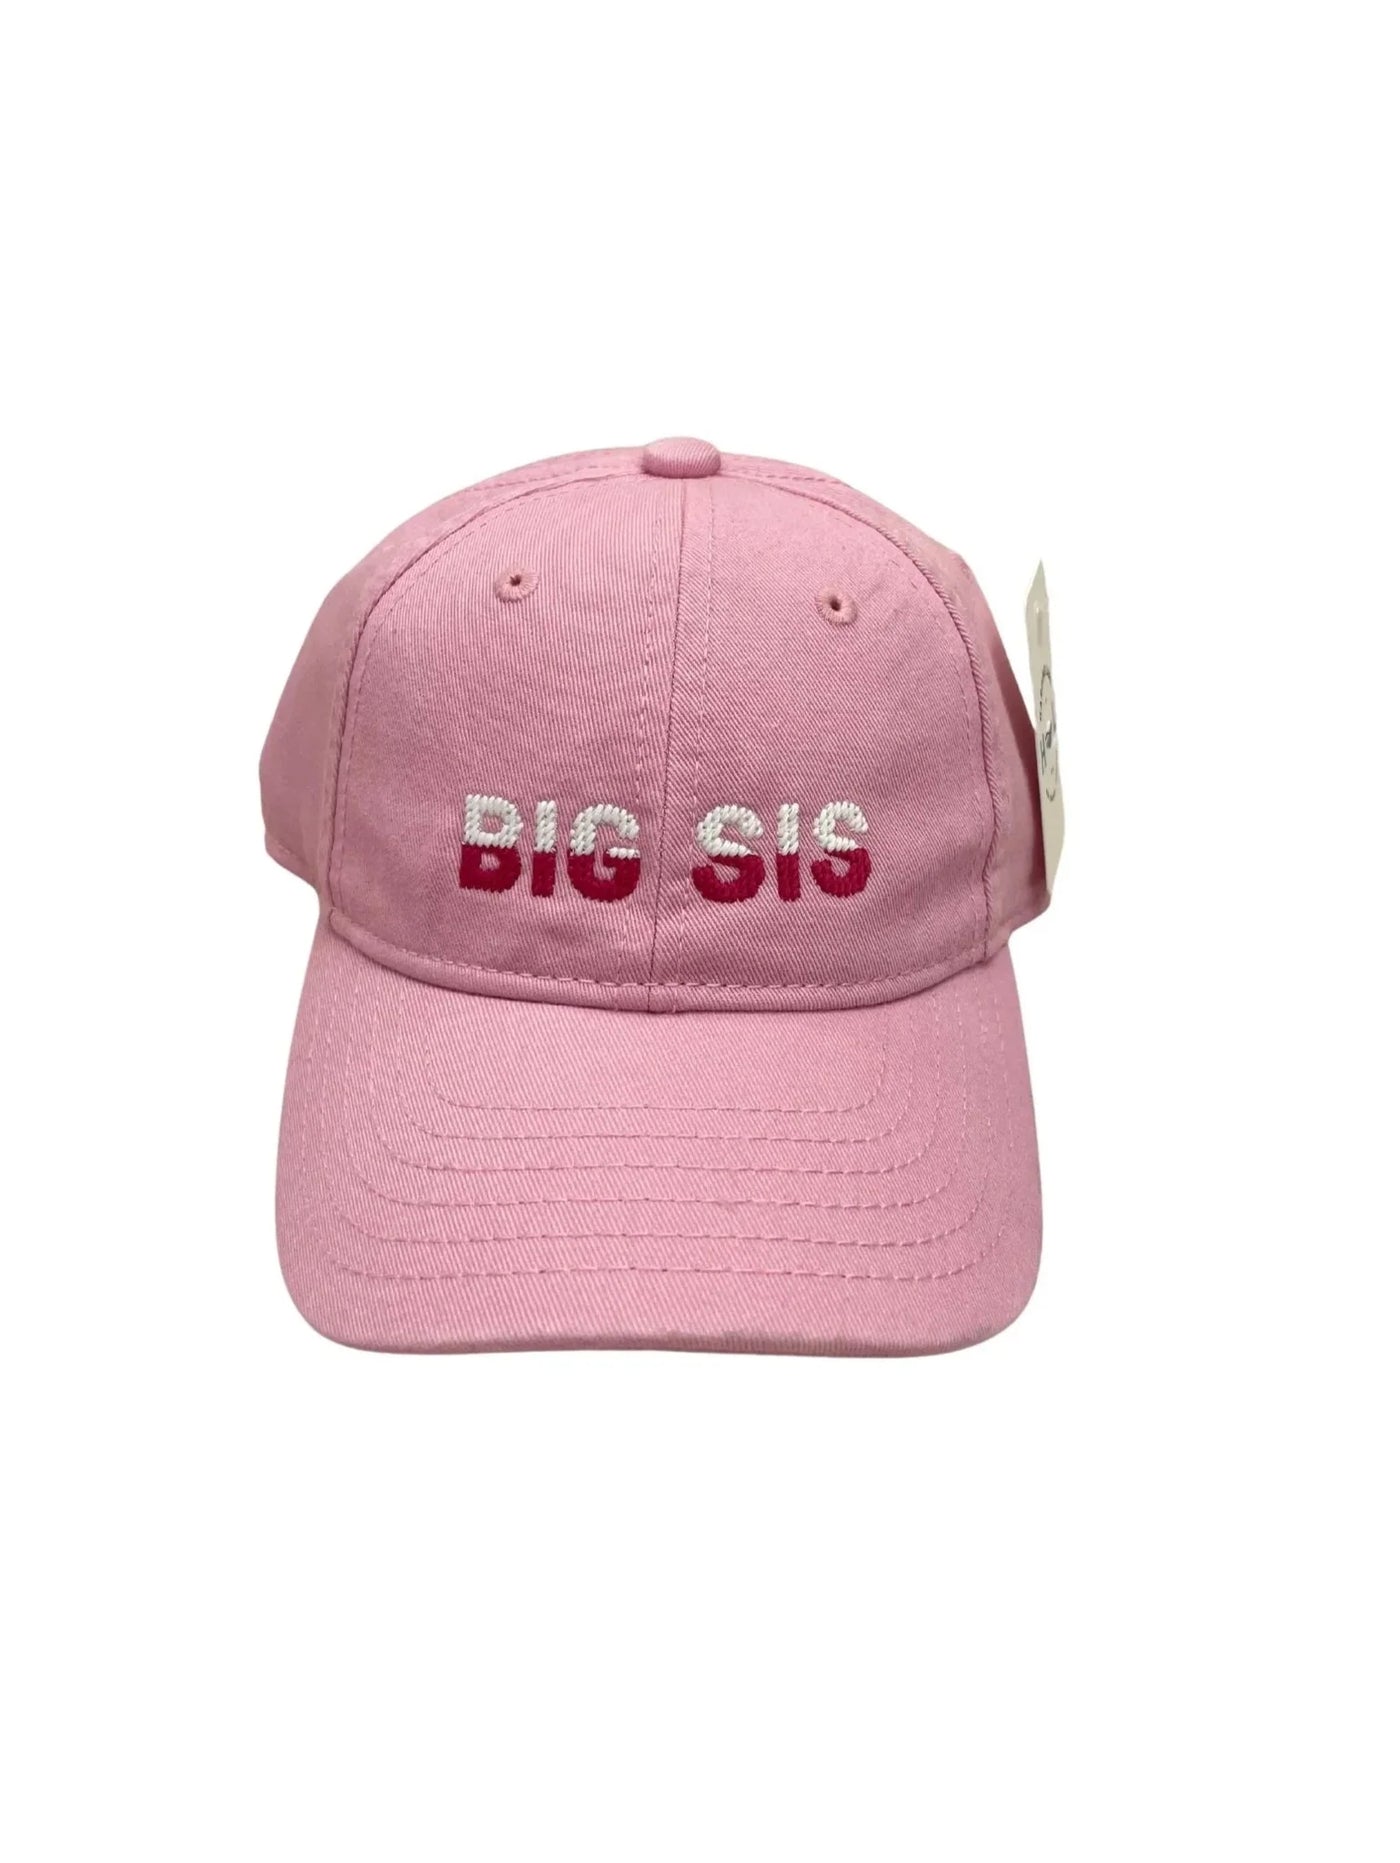 Kids Big Sis on Light Pink  Baseball Hat